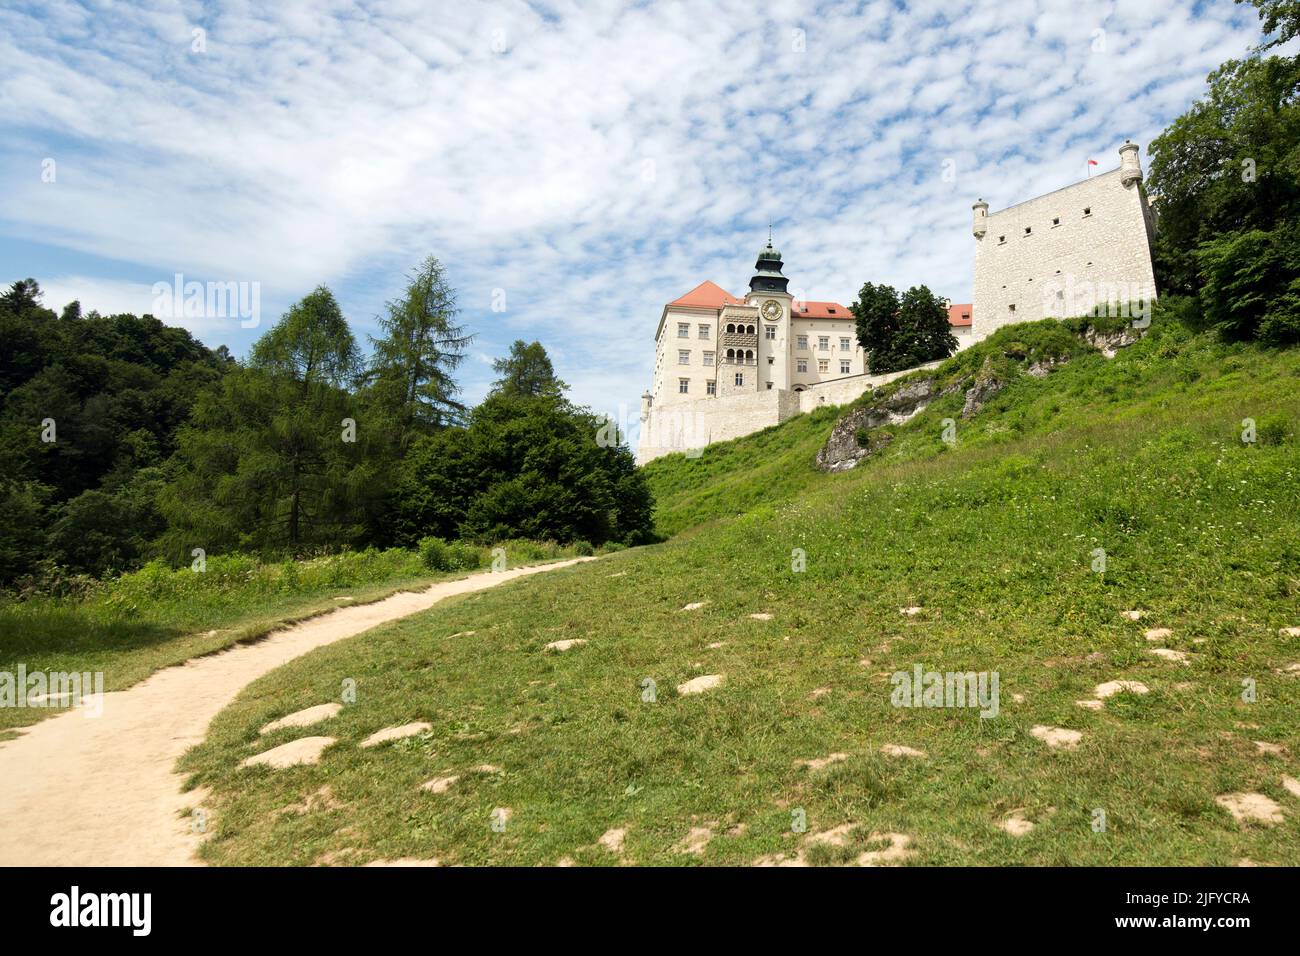 Pieskowa Skala Castle on the hill in Poland Stock Photo